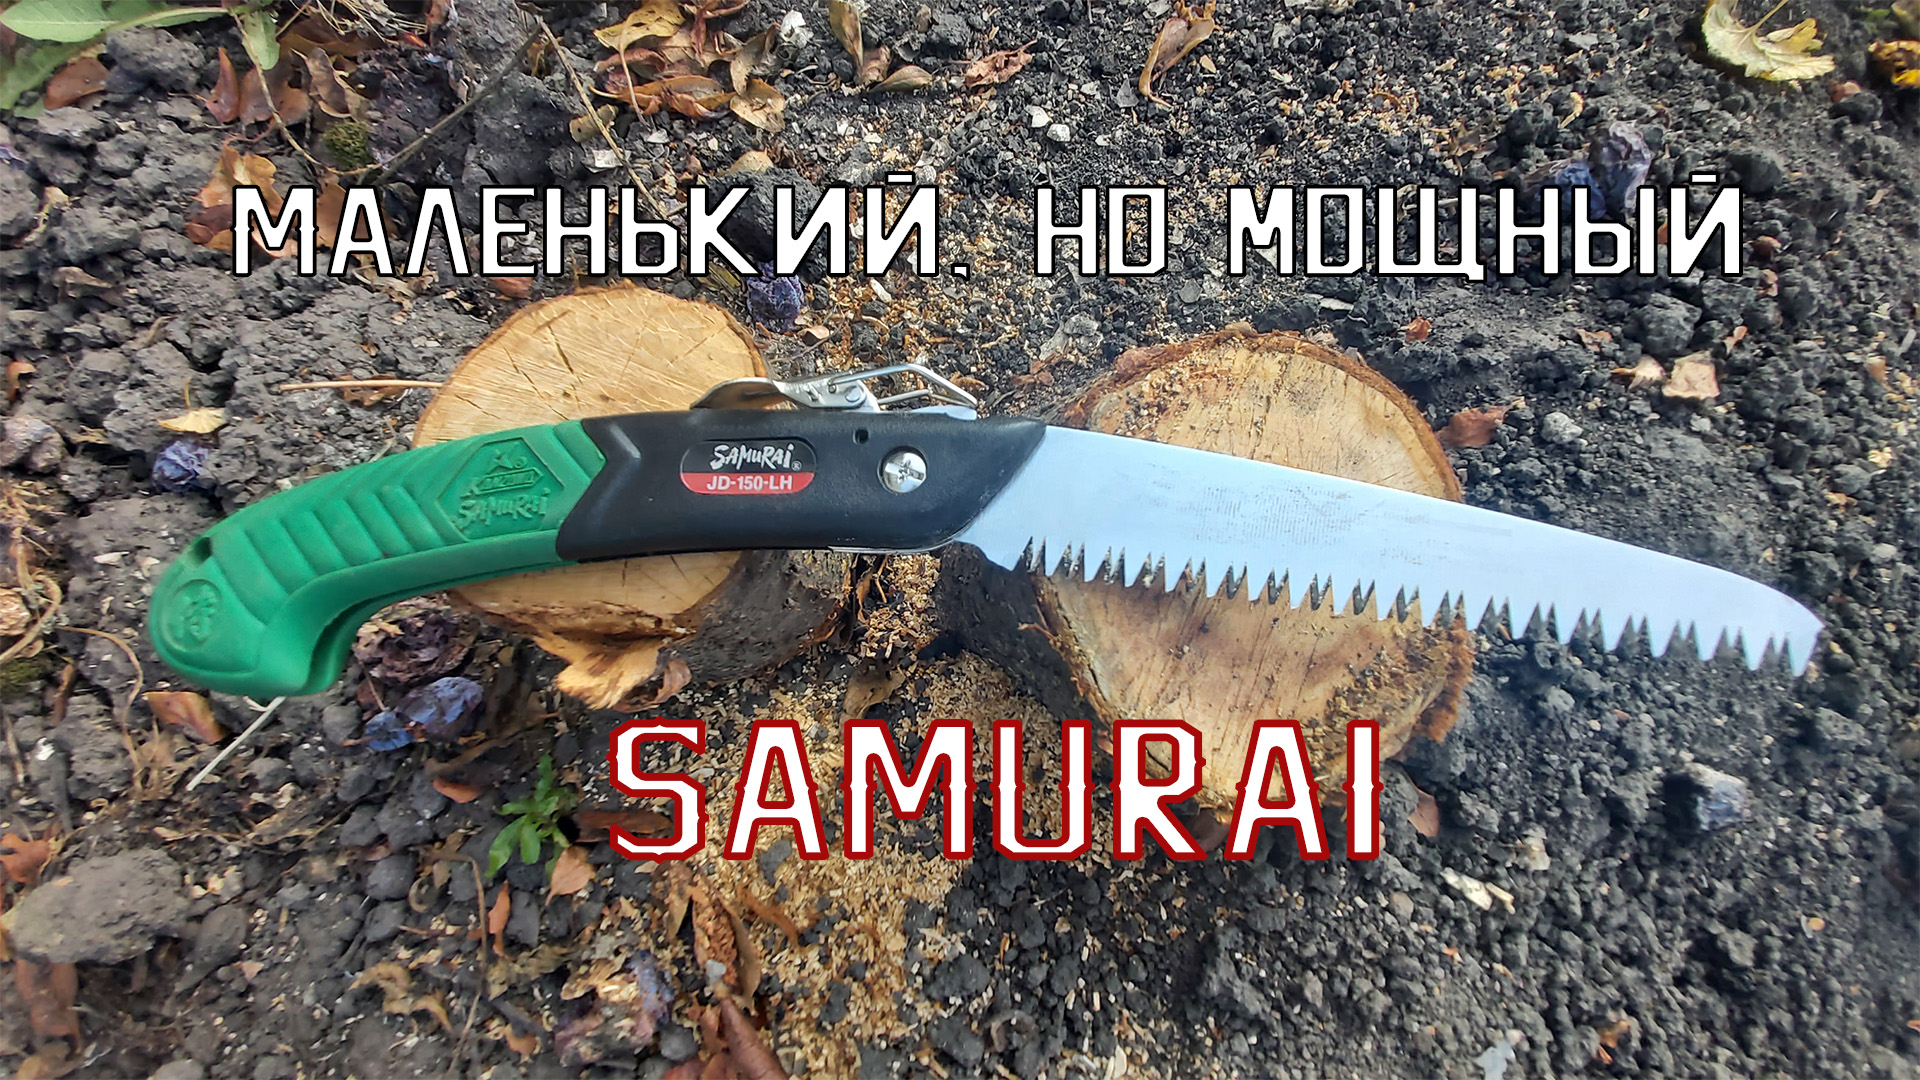 Samurai JD-150-LH | Складная, садовая пила